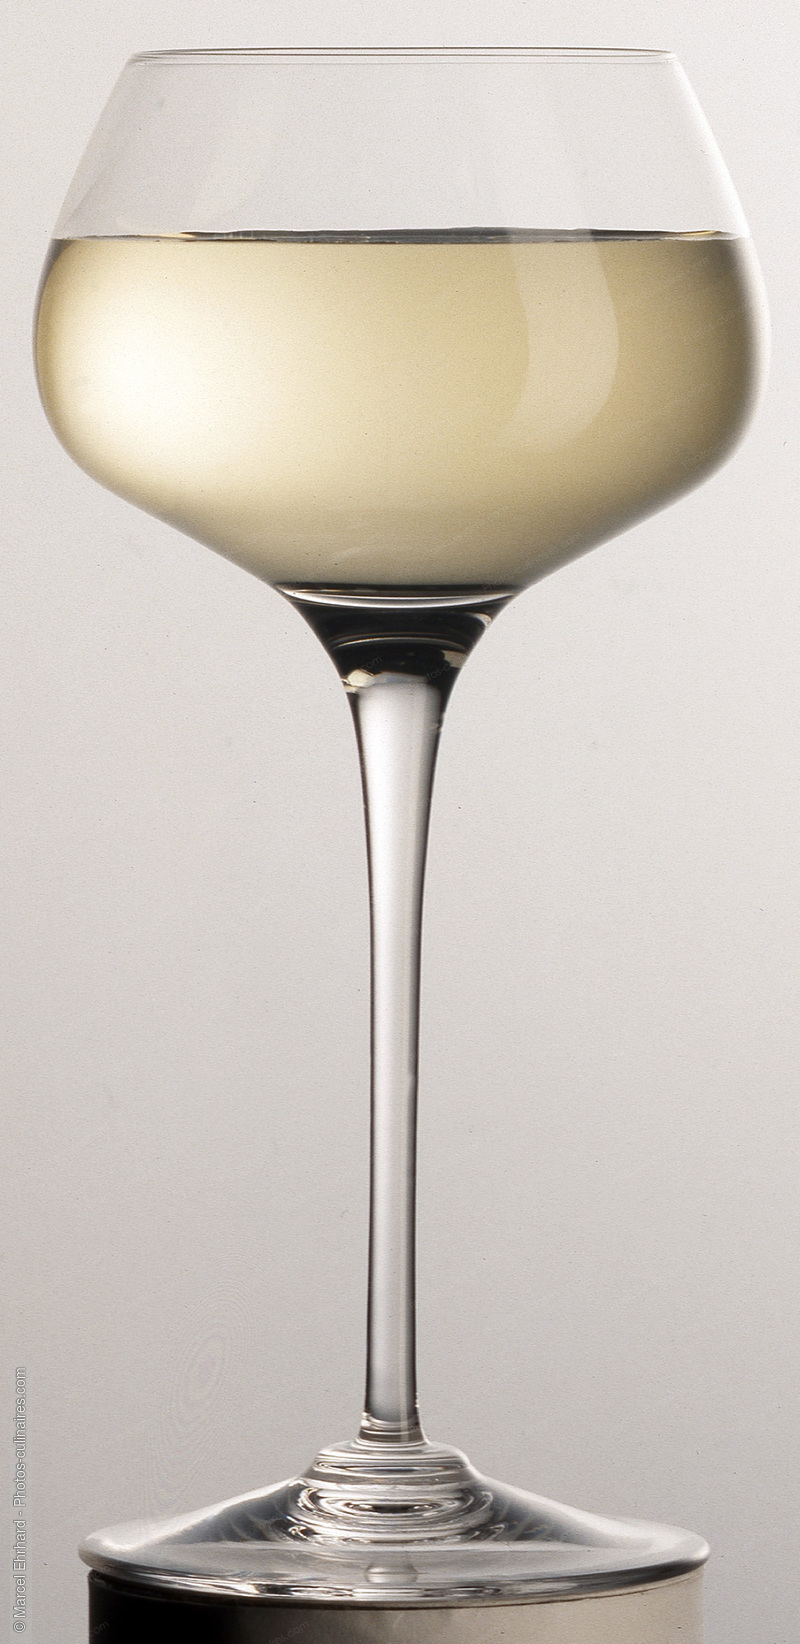 Verre de vin blanc - photo référence BO38.jpg